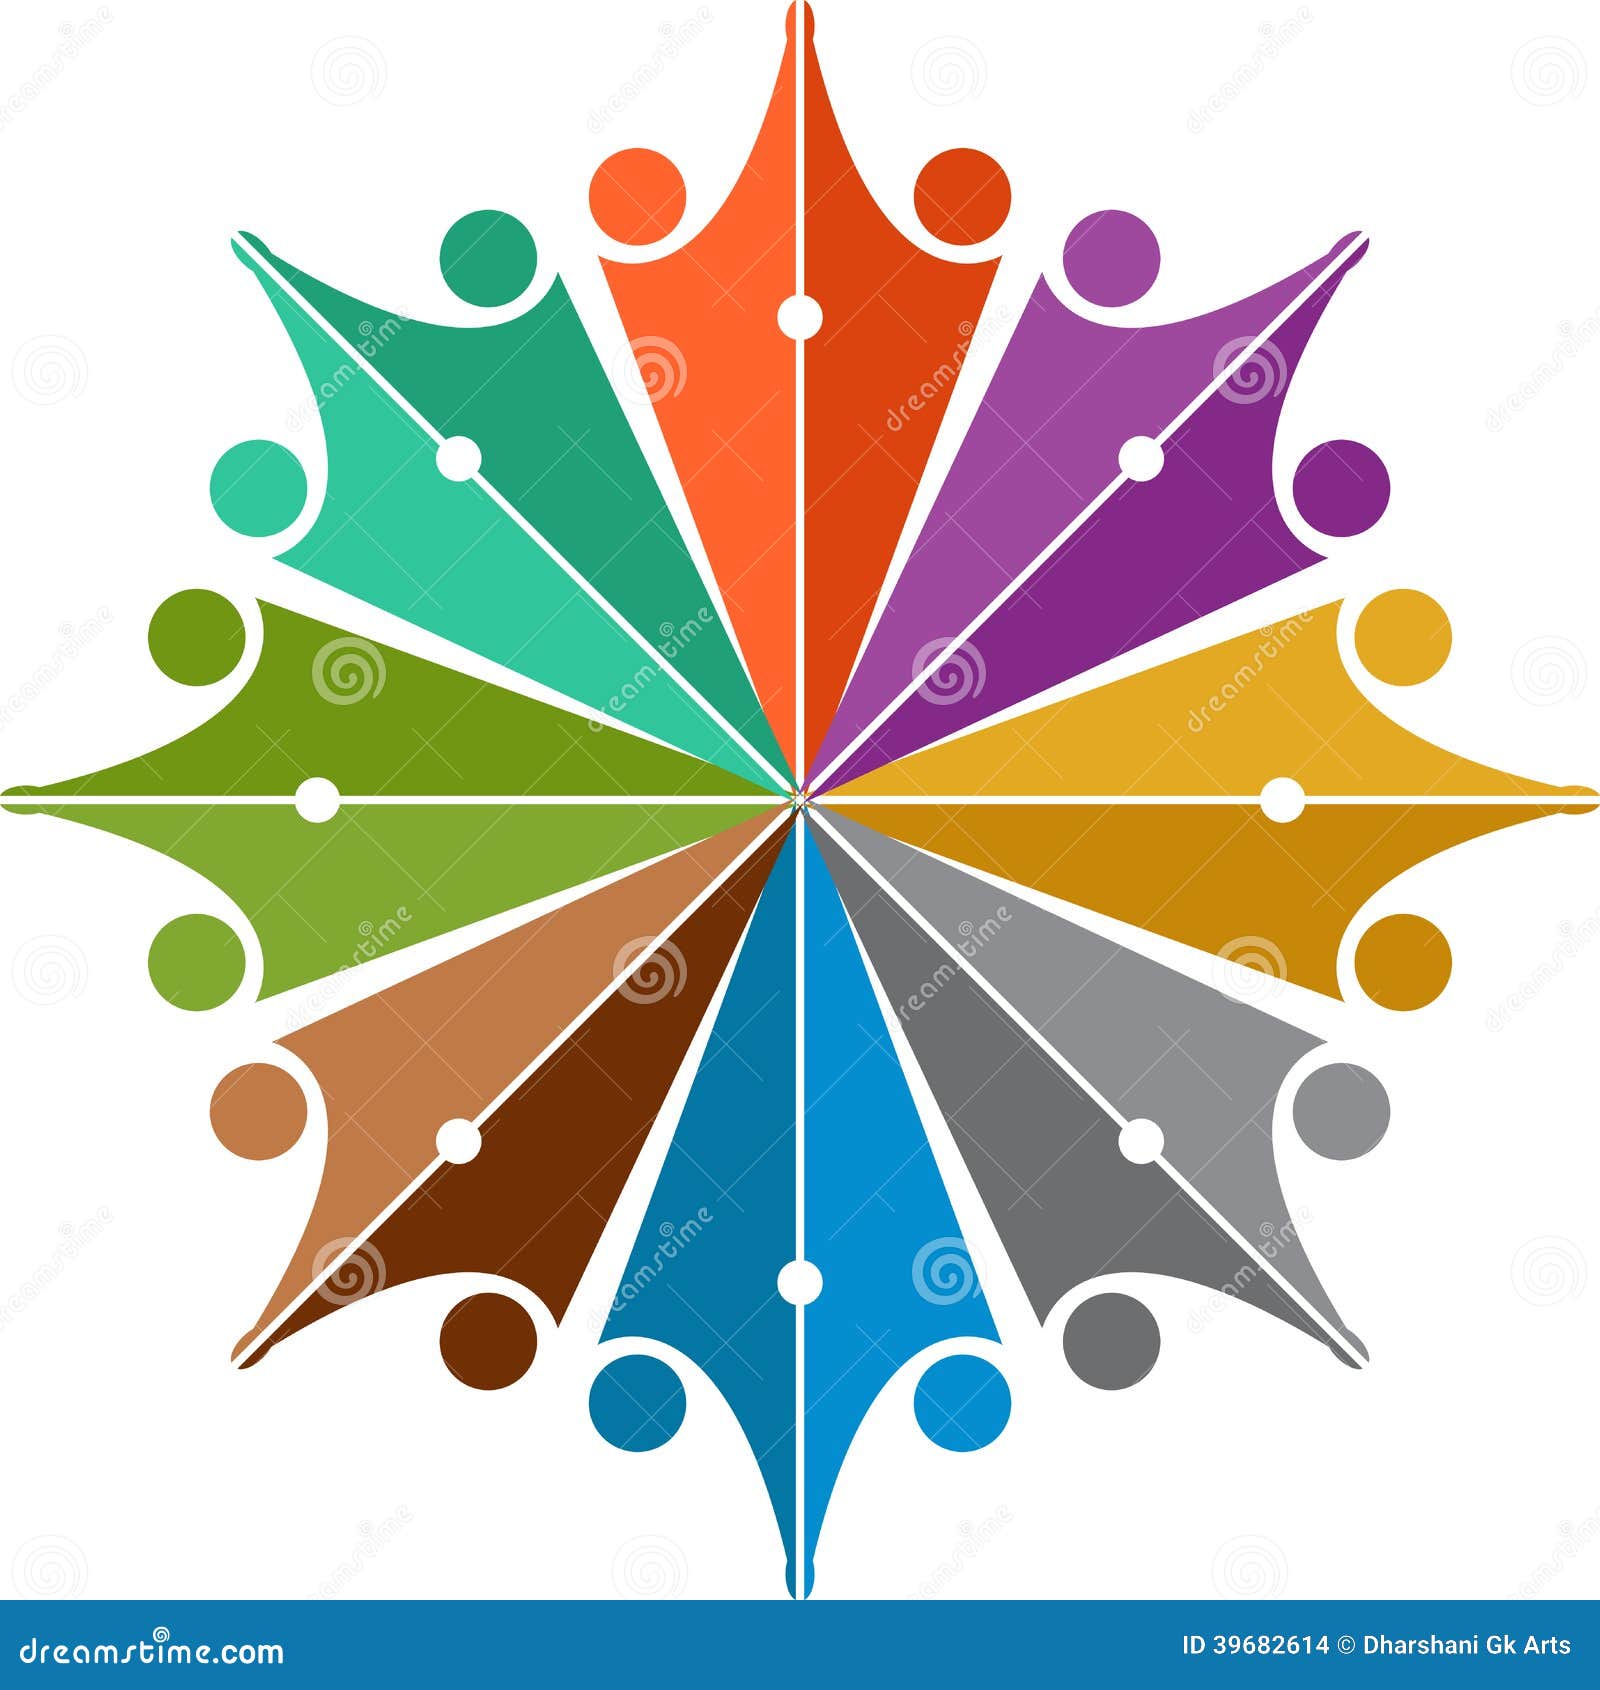 media peoples logo